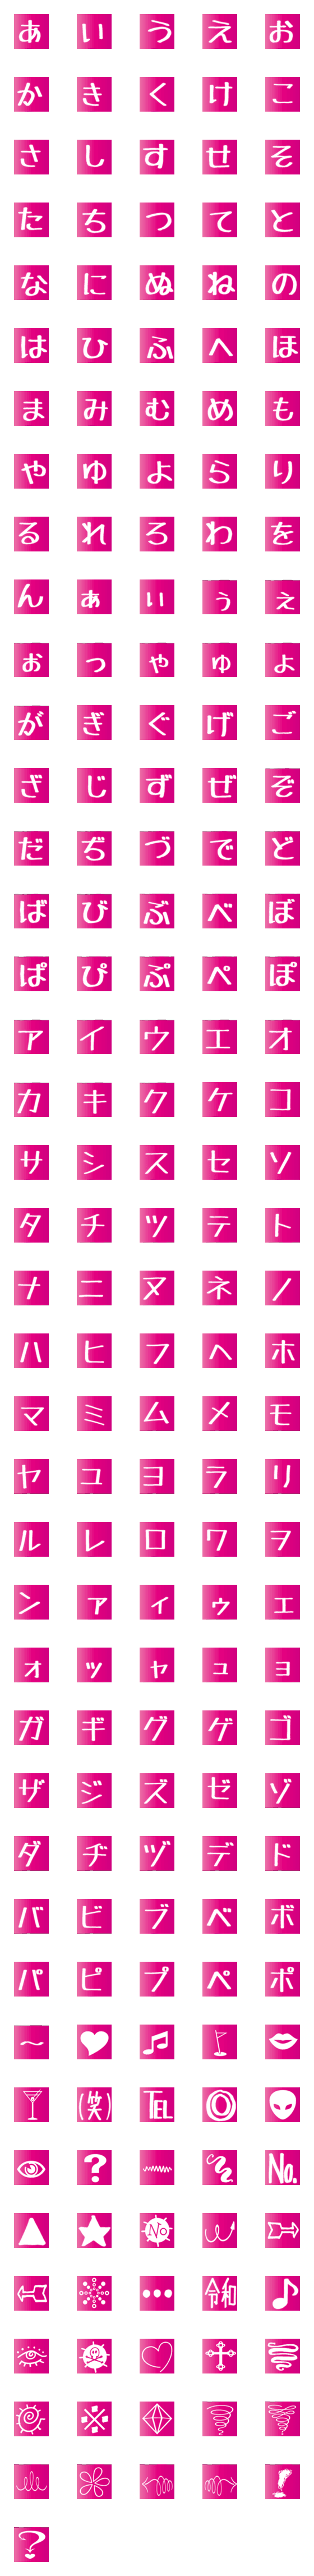 Line絵文字 ピンク背景の白抜きデコ文字 1種類 1円